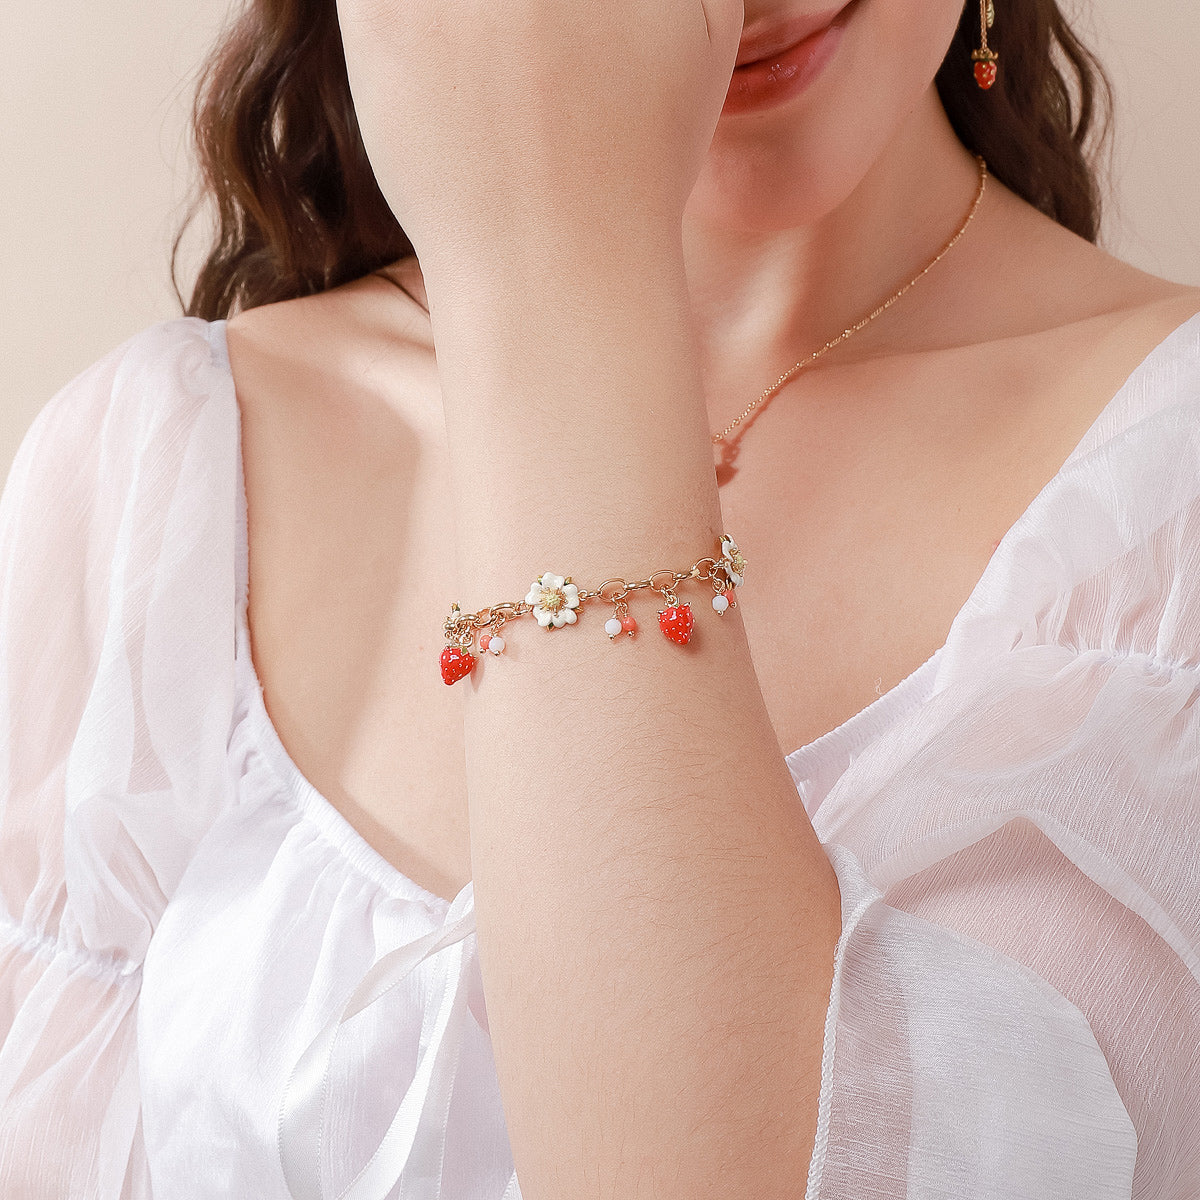 Strawberry Charms Bracelet